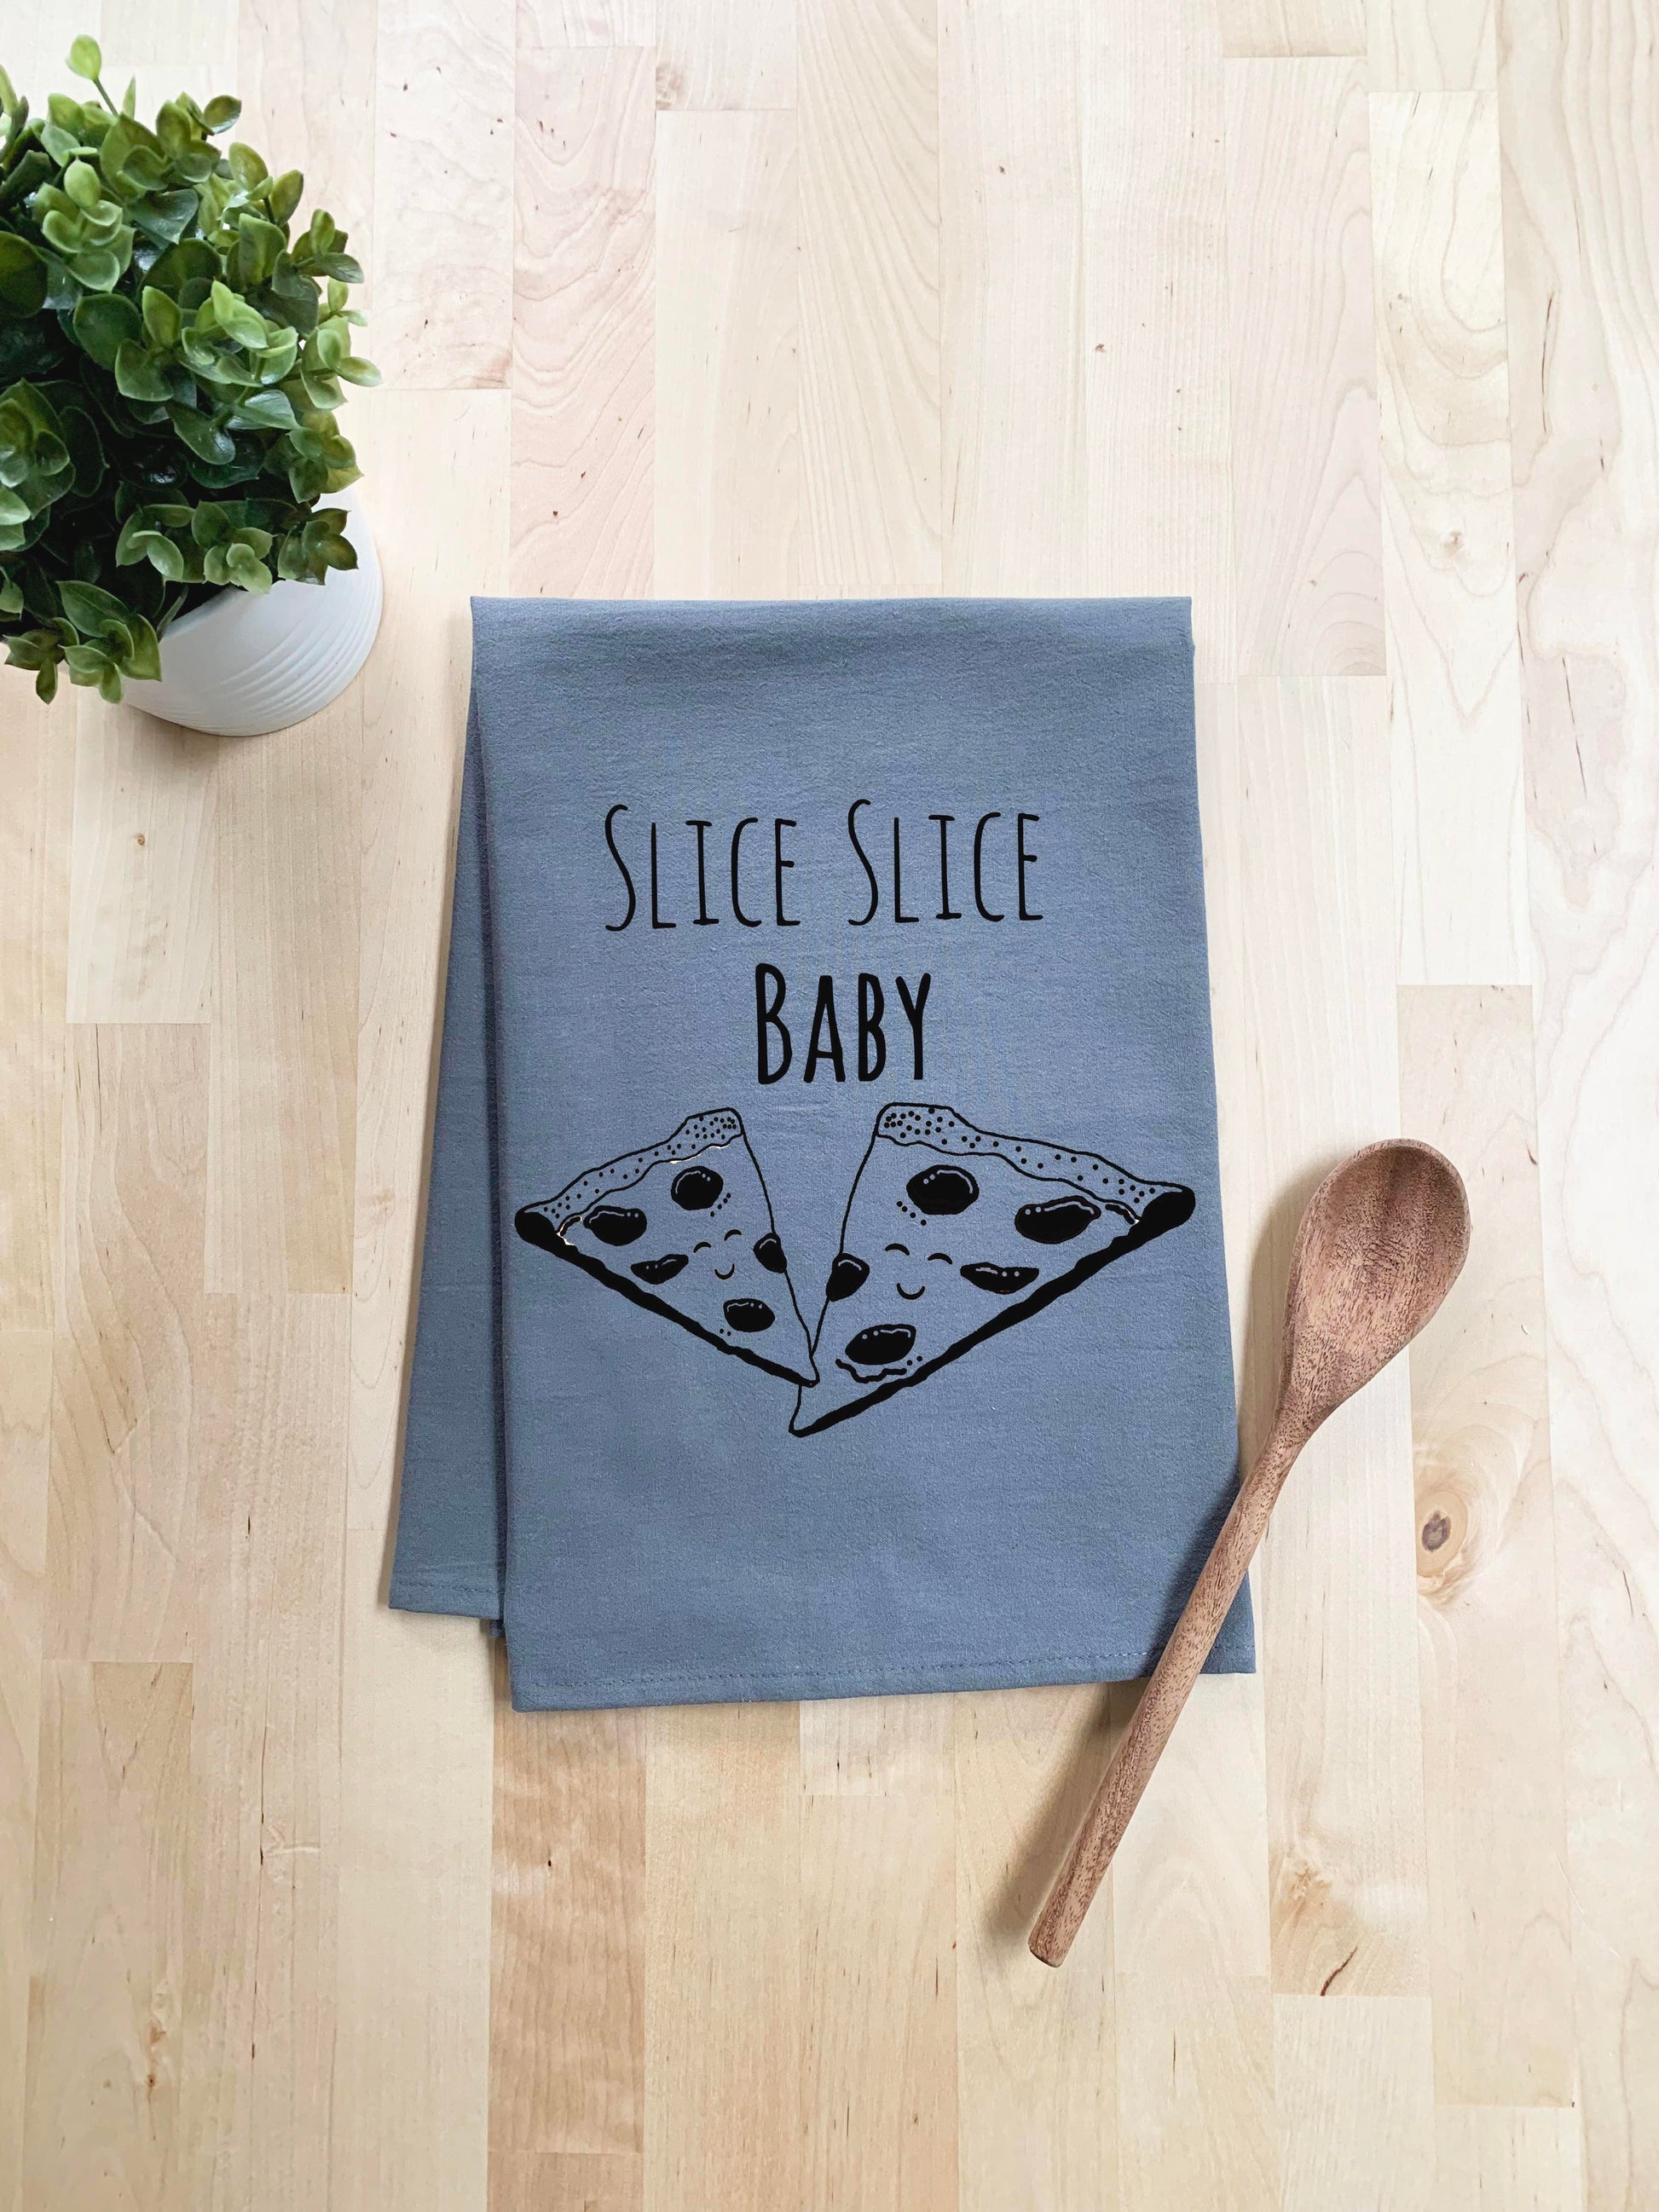 Slice Slice Baby Dish Towel - Best Seller - White Or Gray - MoonlightMakers